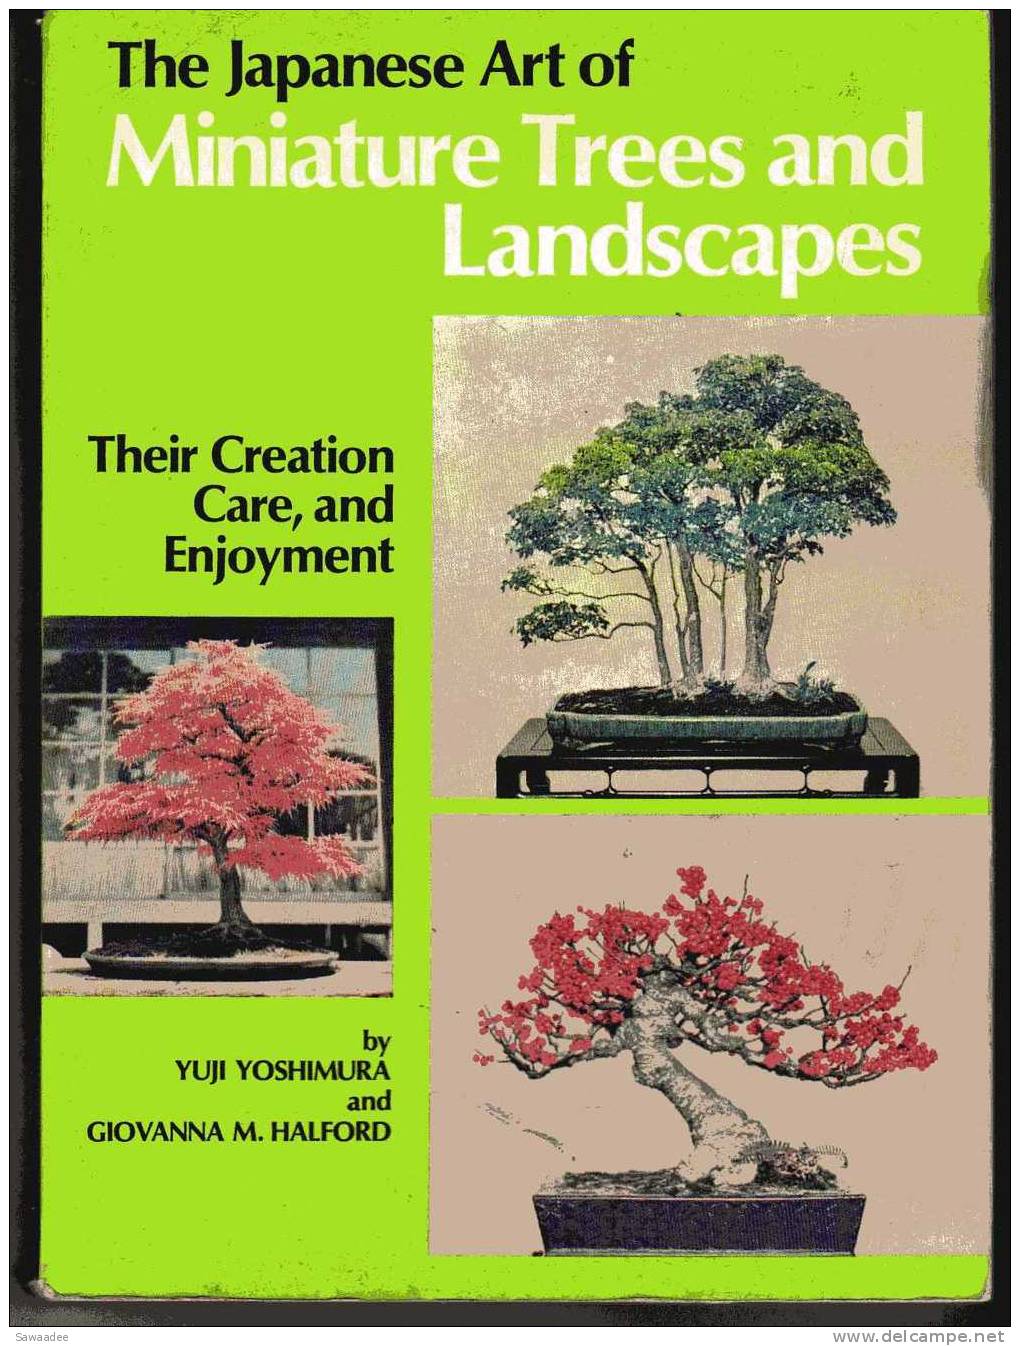 LIVRE - JARDINAGE - THE JAPANESE ART OF MINIATURE TREES AND LANDSCAPES - YUJI YOSHIMURA - Agricoltura